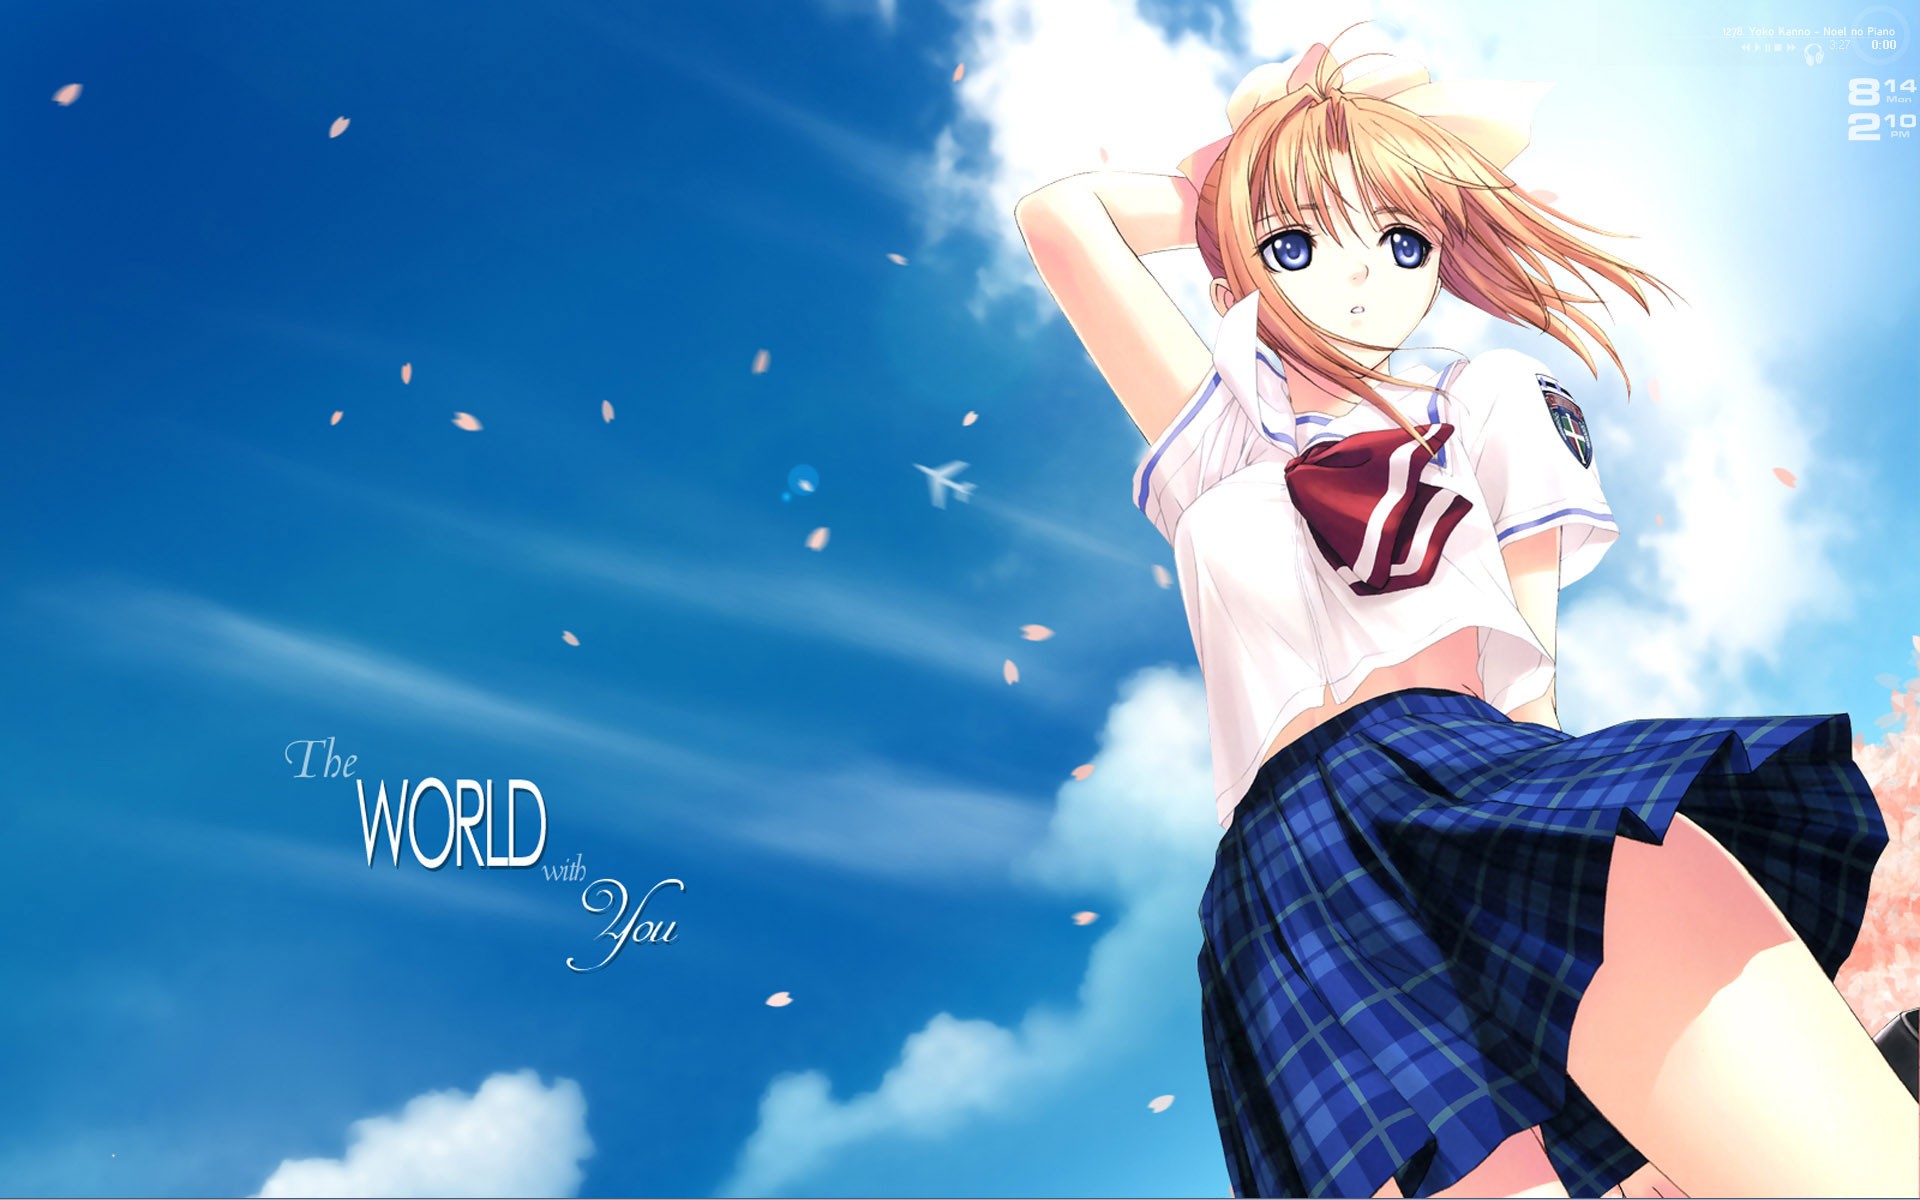 Anime girl wallpaper ·① Download free beautiful HD ...